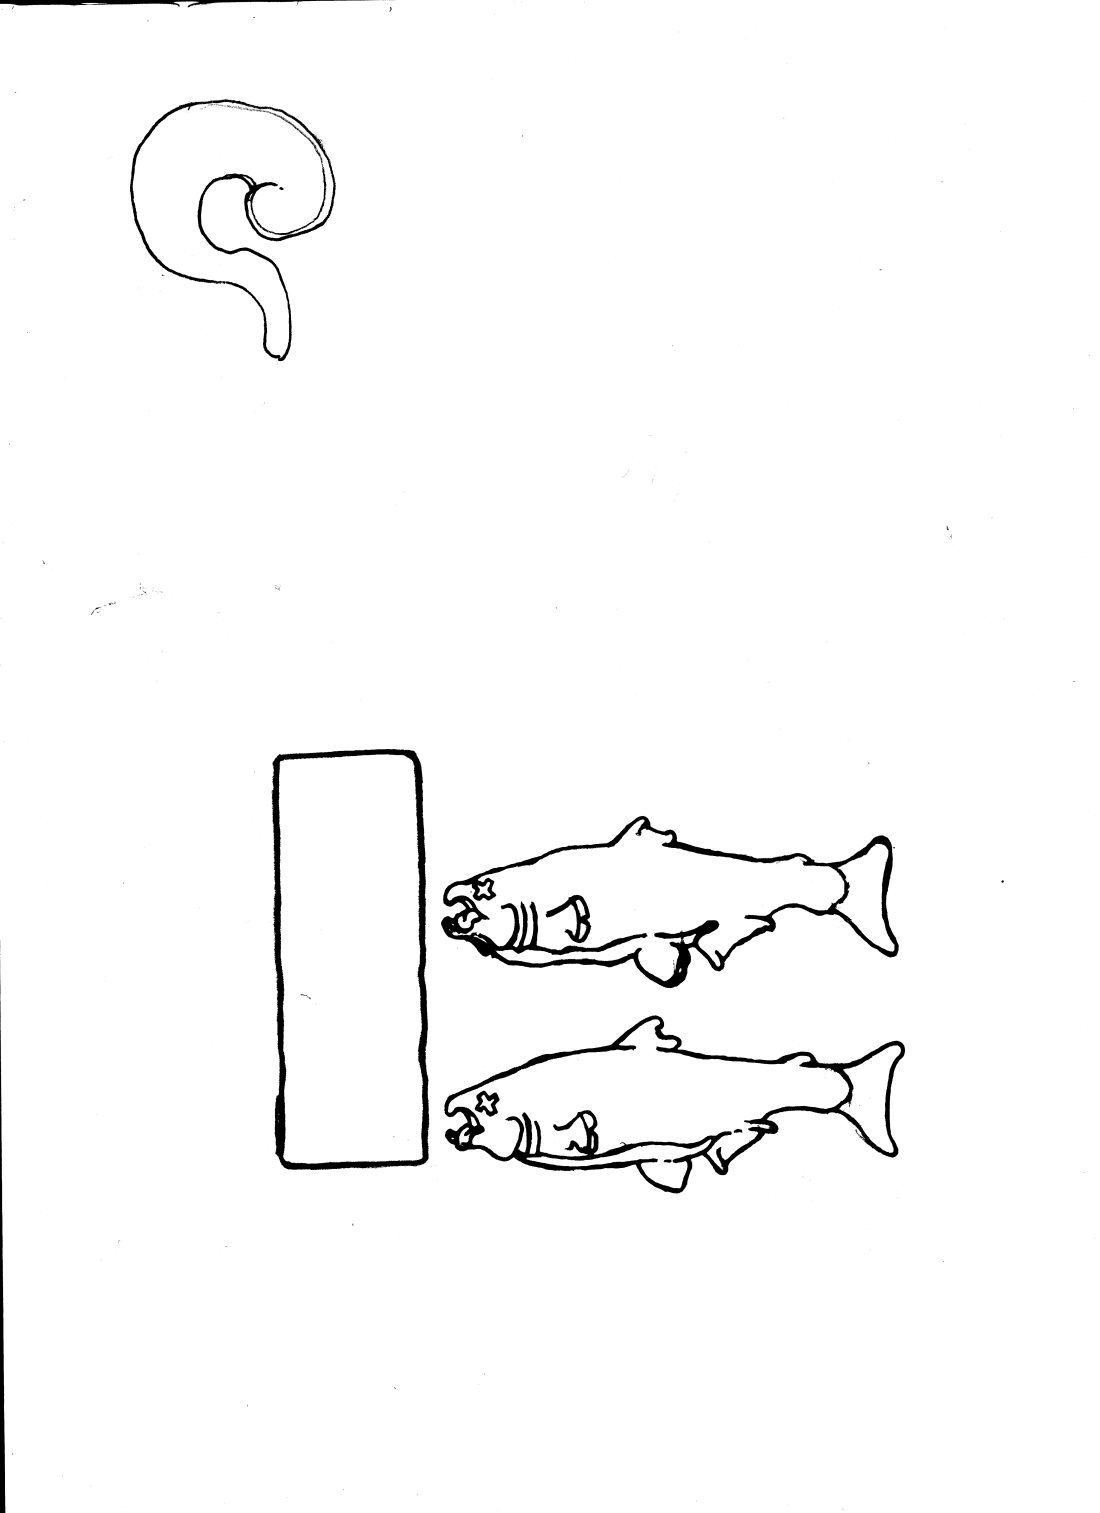 Fish animation tacing paper